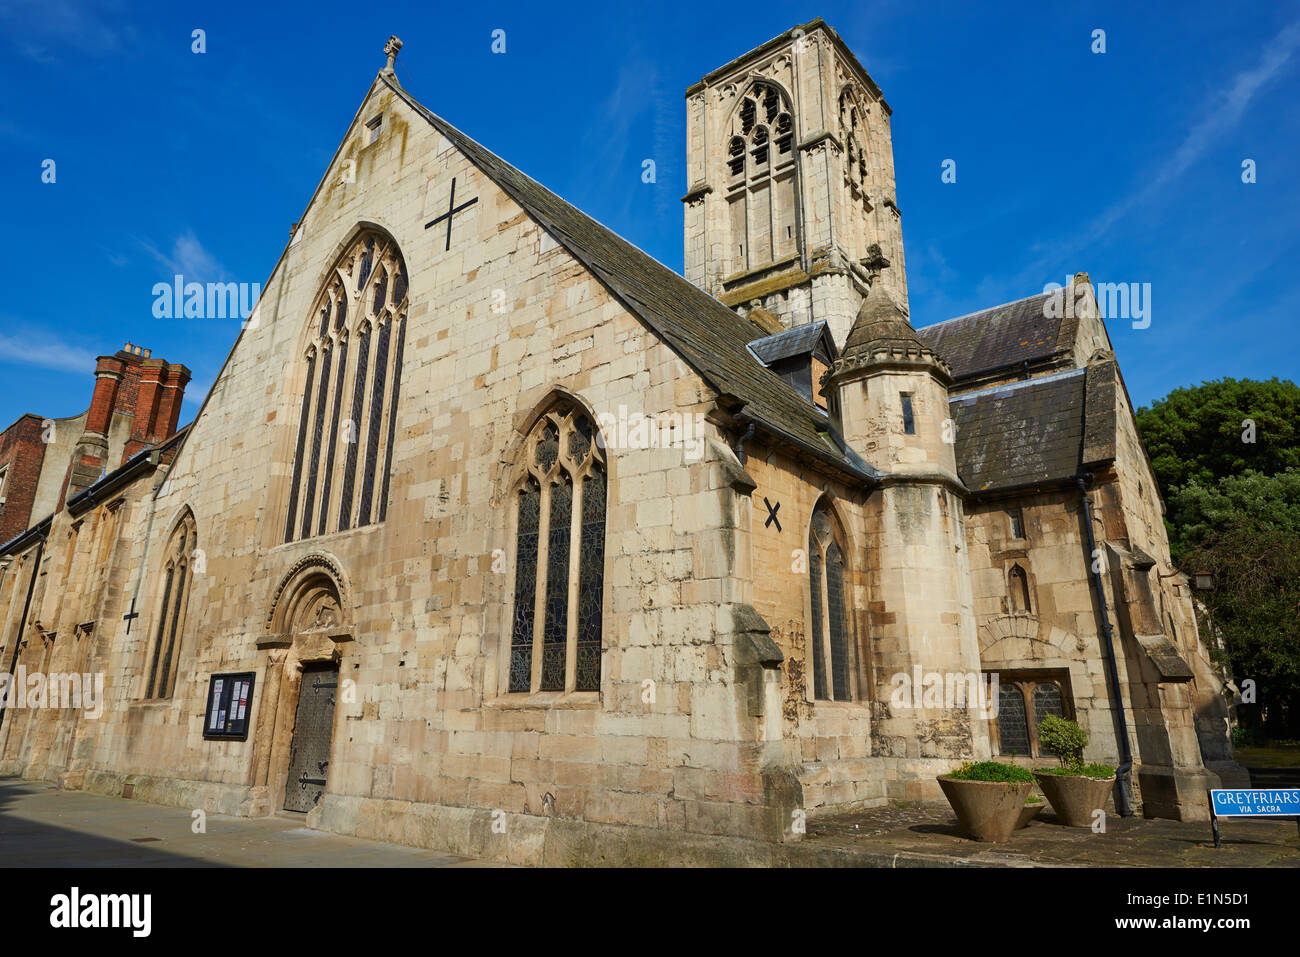 St. Mary de Crypt Southgate Street Gloucester Gloucestershire UK Stockfoto